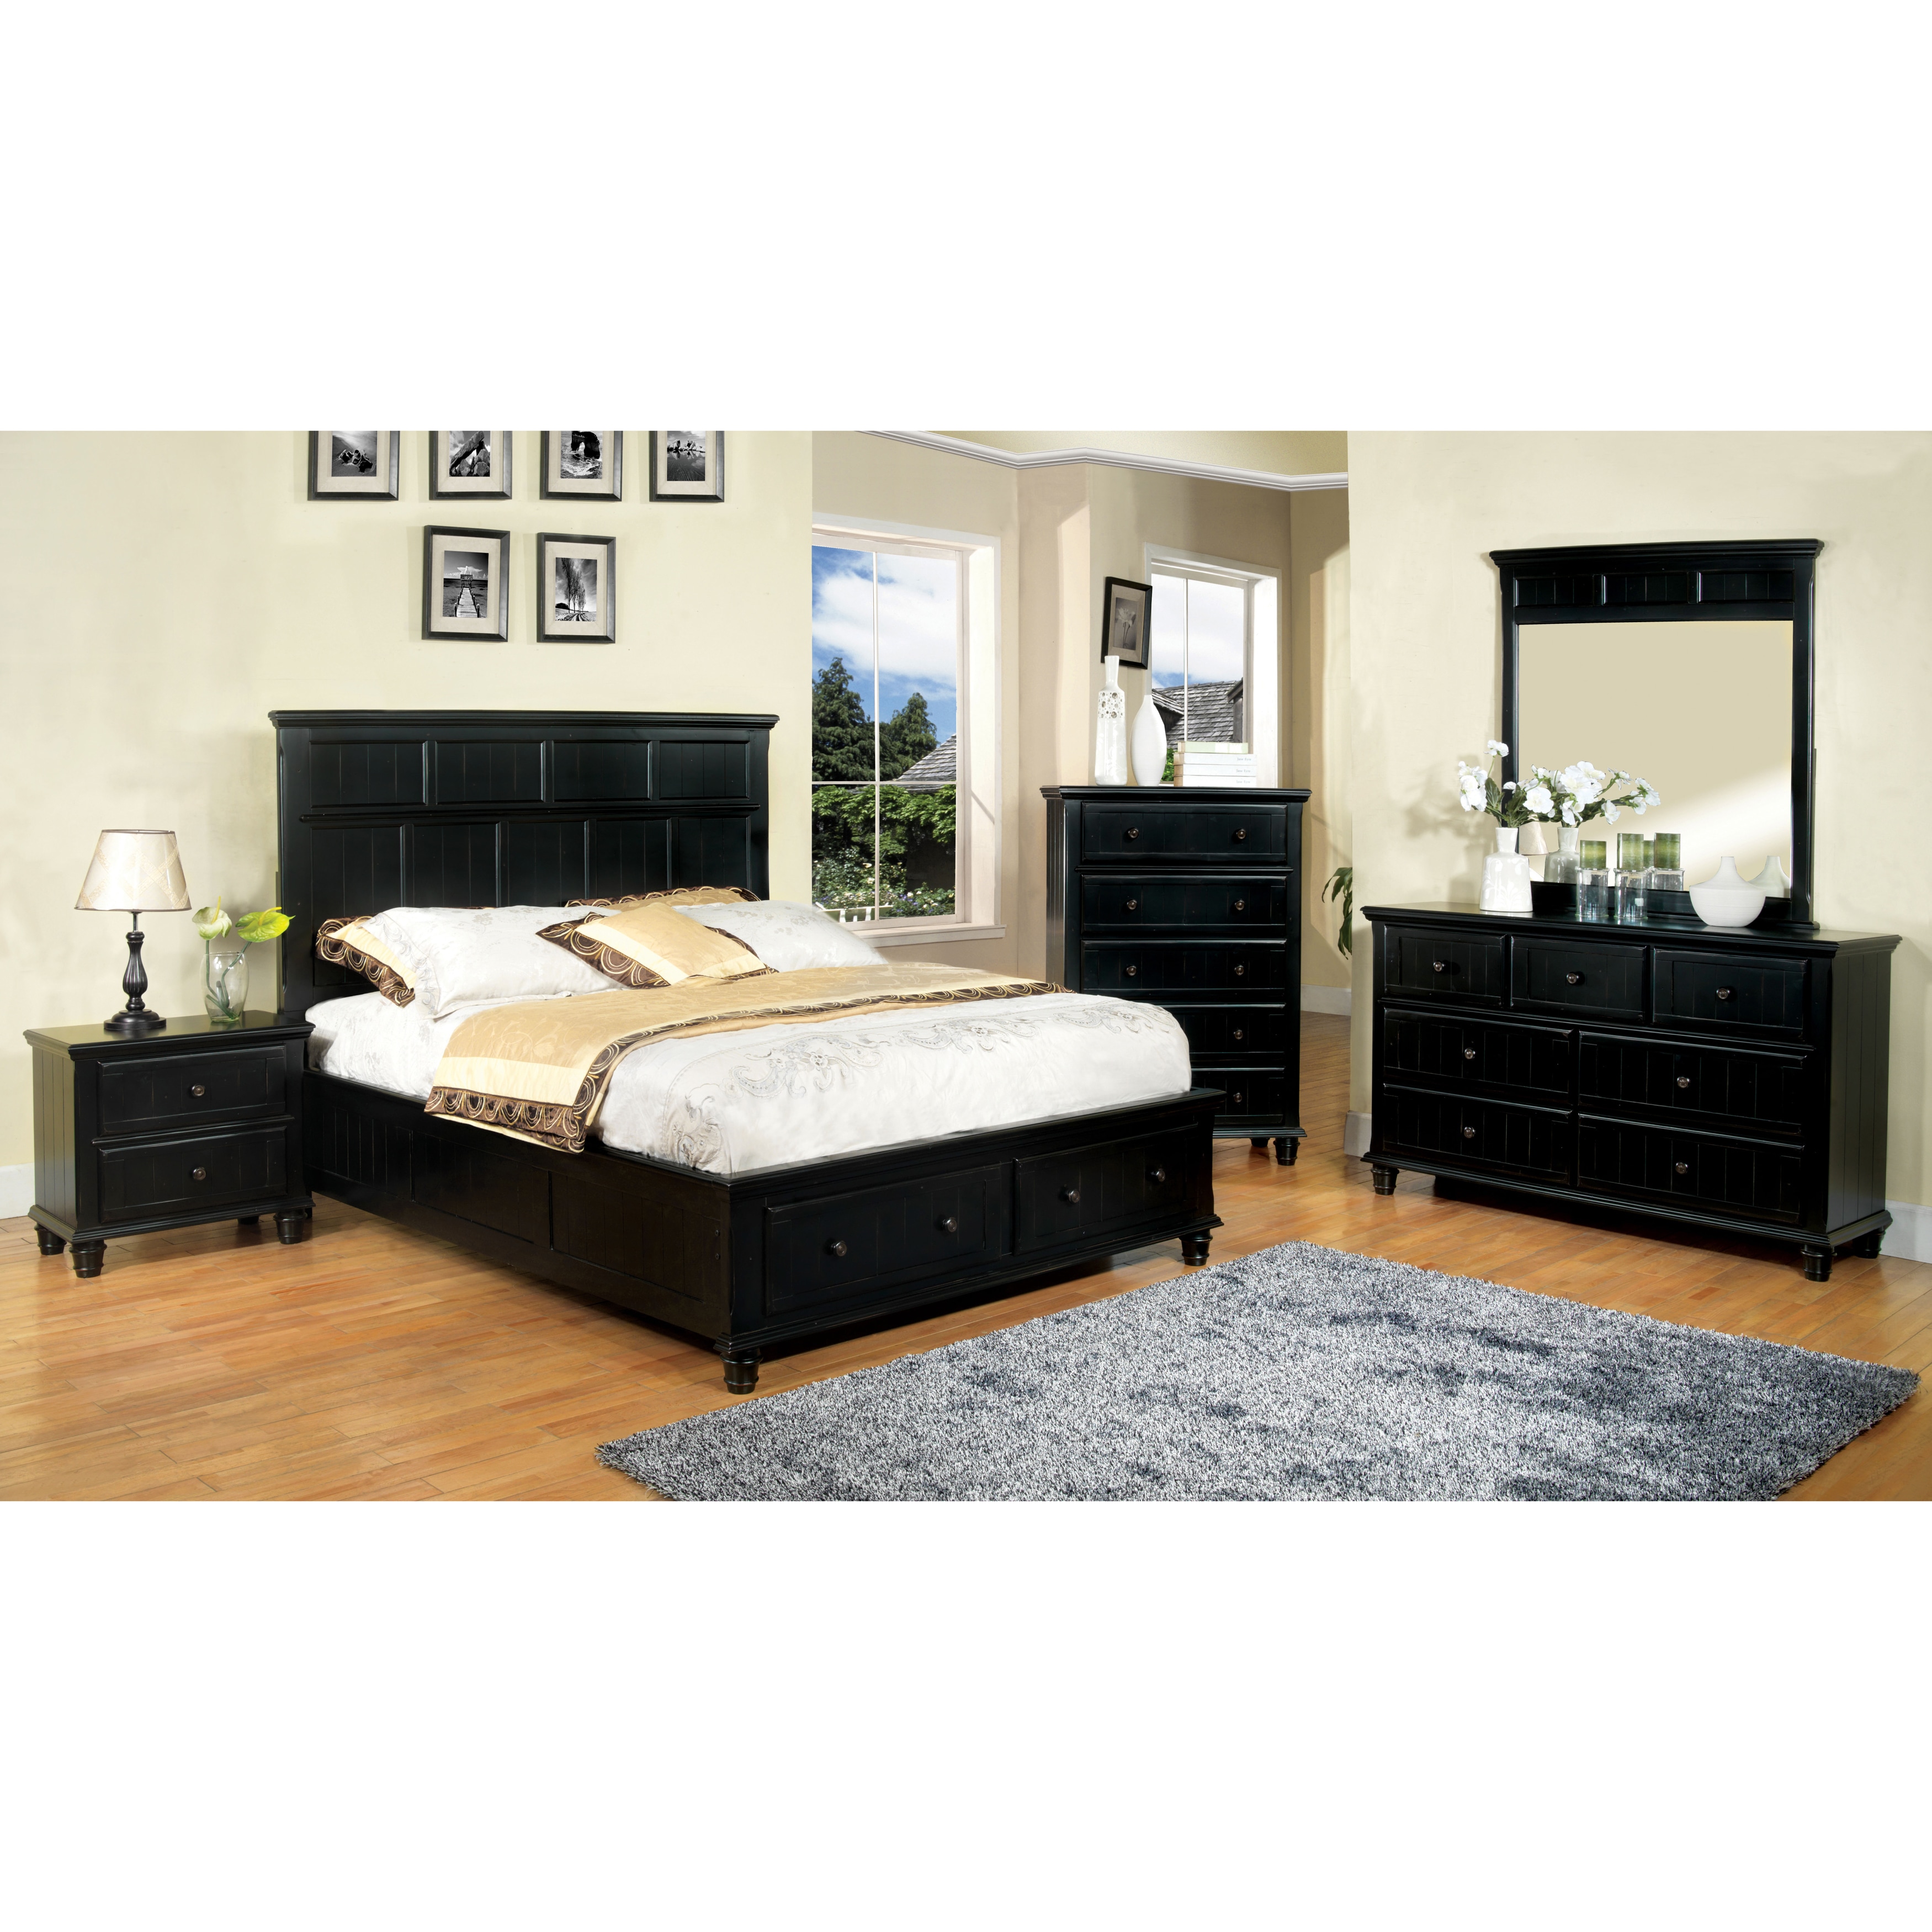 Furniture Of America Transitional 4 Piece Black Cottage Style Bedroom Set